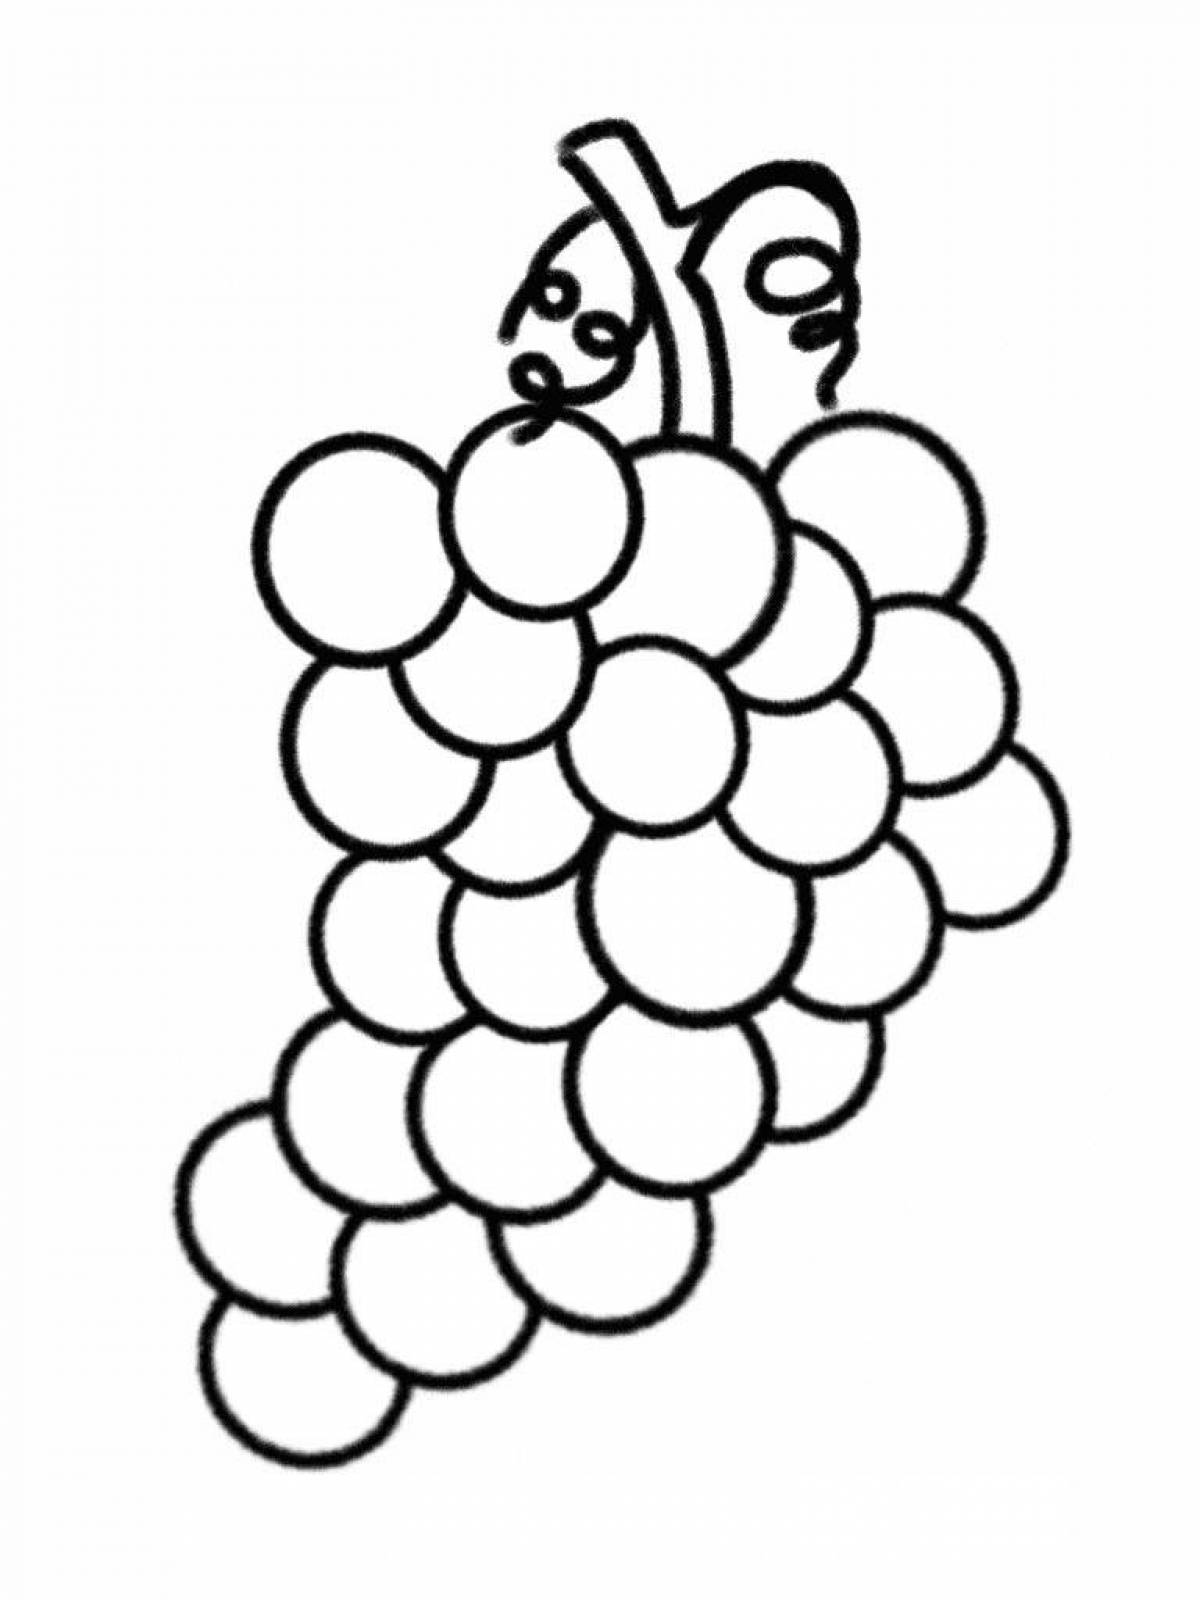 Раскраски гранд виноград для детей